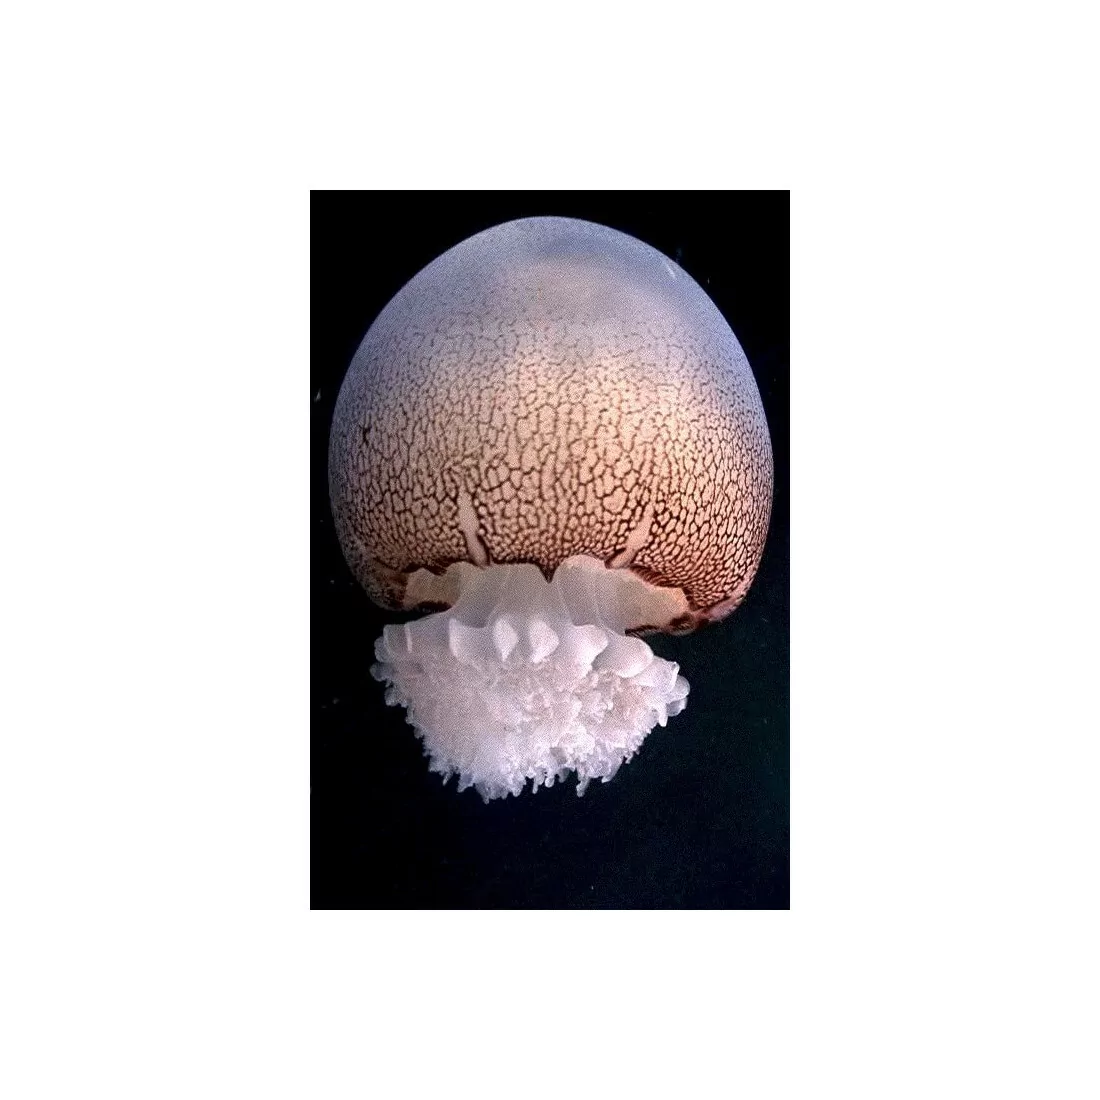 Stomolophus meleagris jellyfish